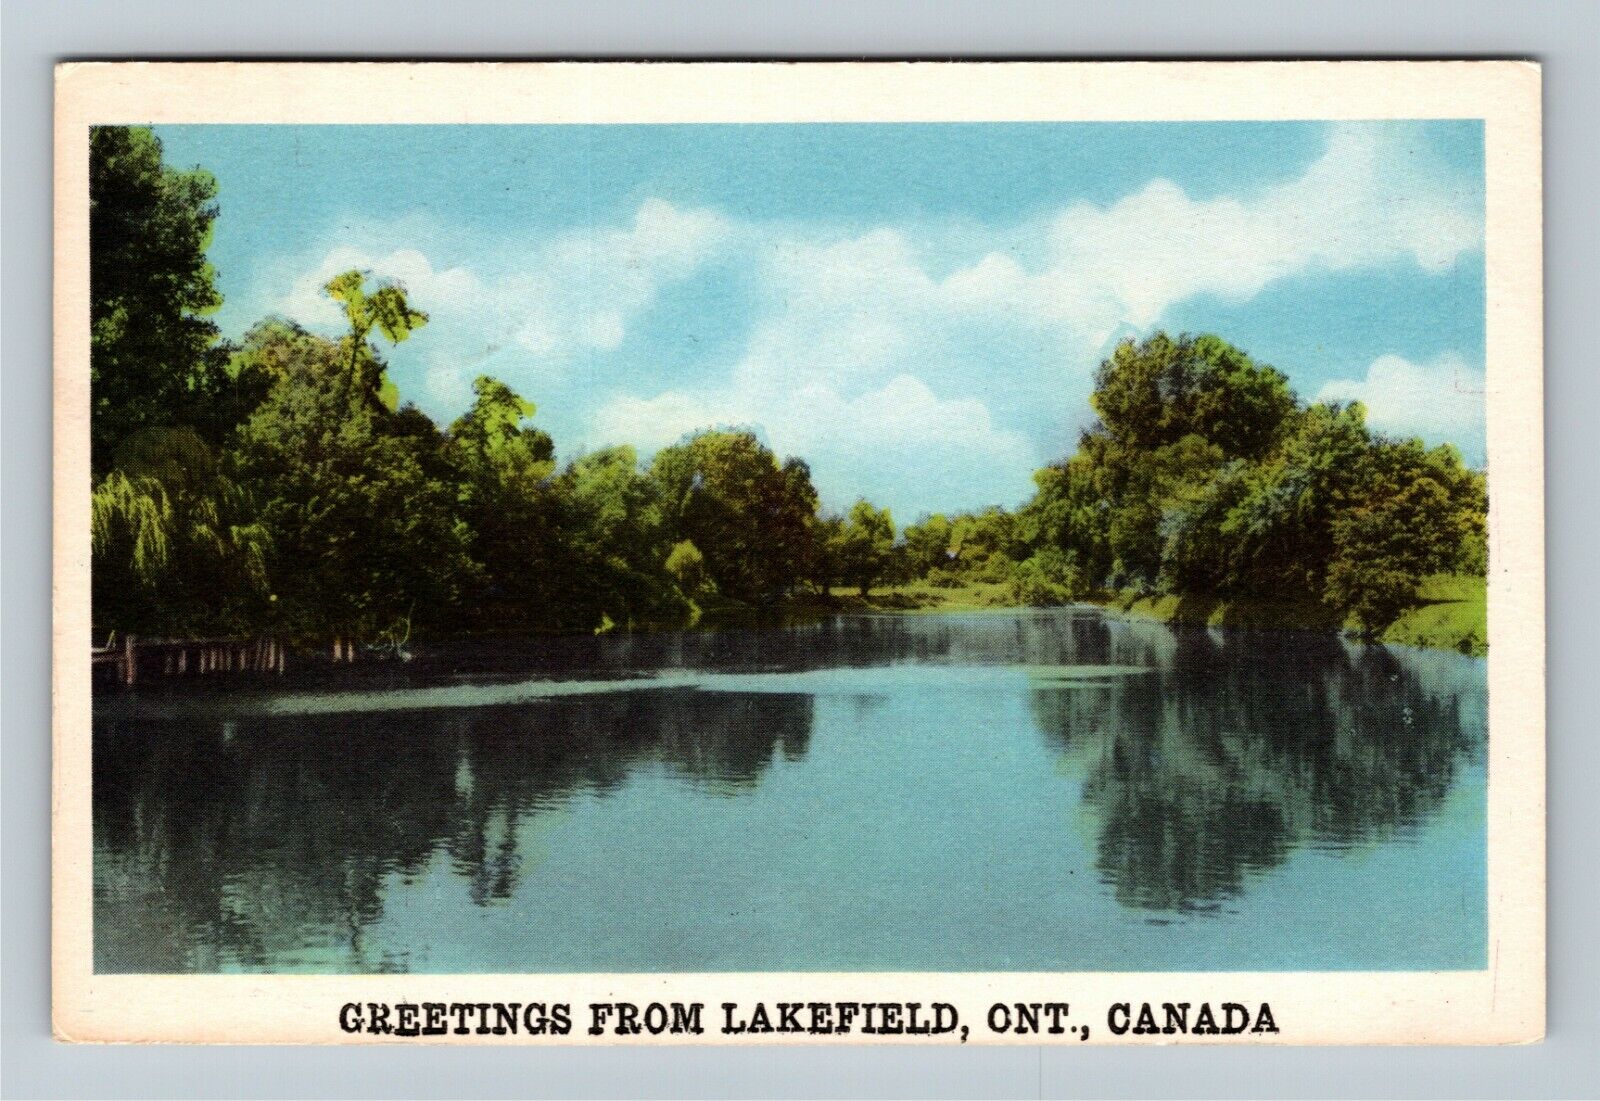 Lakefield Ontario Canada, Greetings, Scenic Lake View Vintage Souvenir Postcard